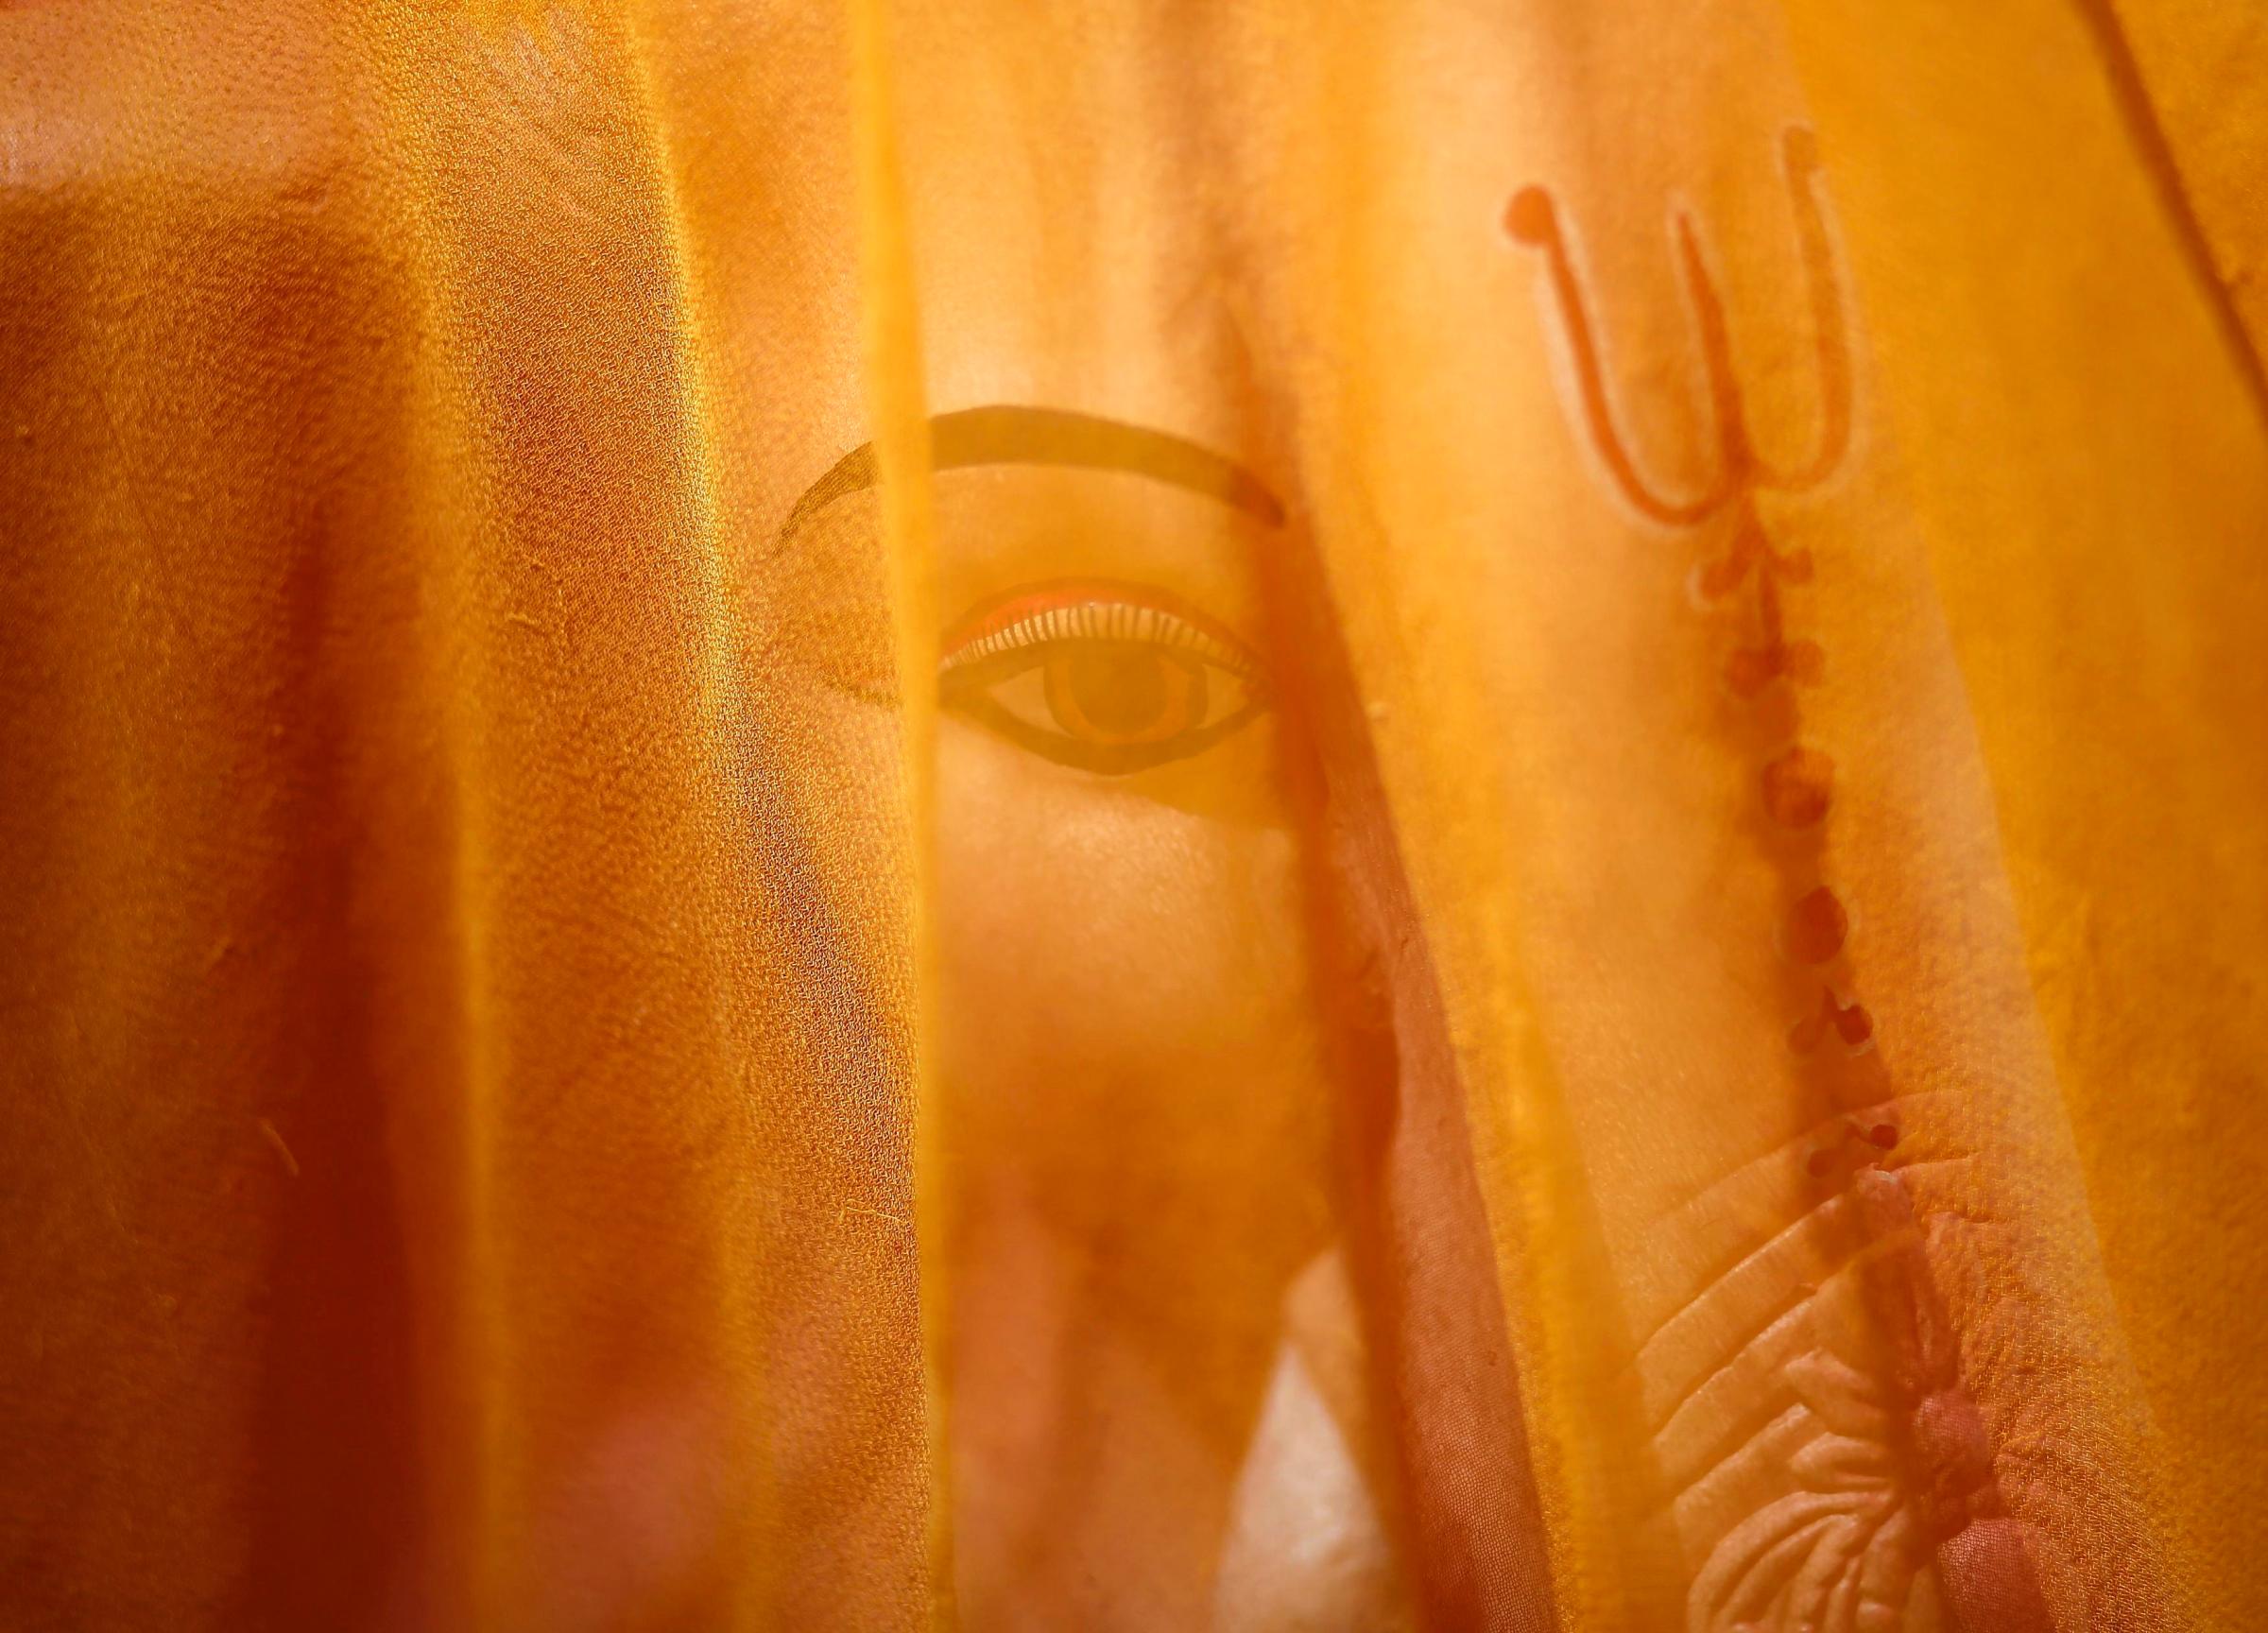 A cloth covered idol of Hindu elephant god Ganesh is pictured at a roadside workshop in New Delhi